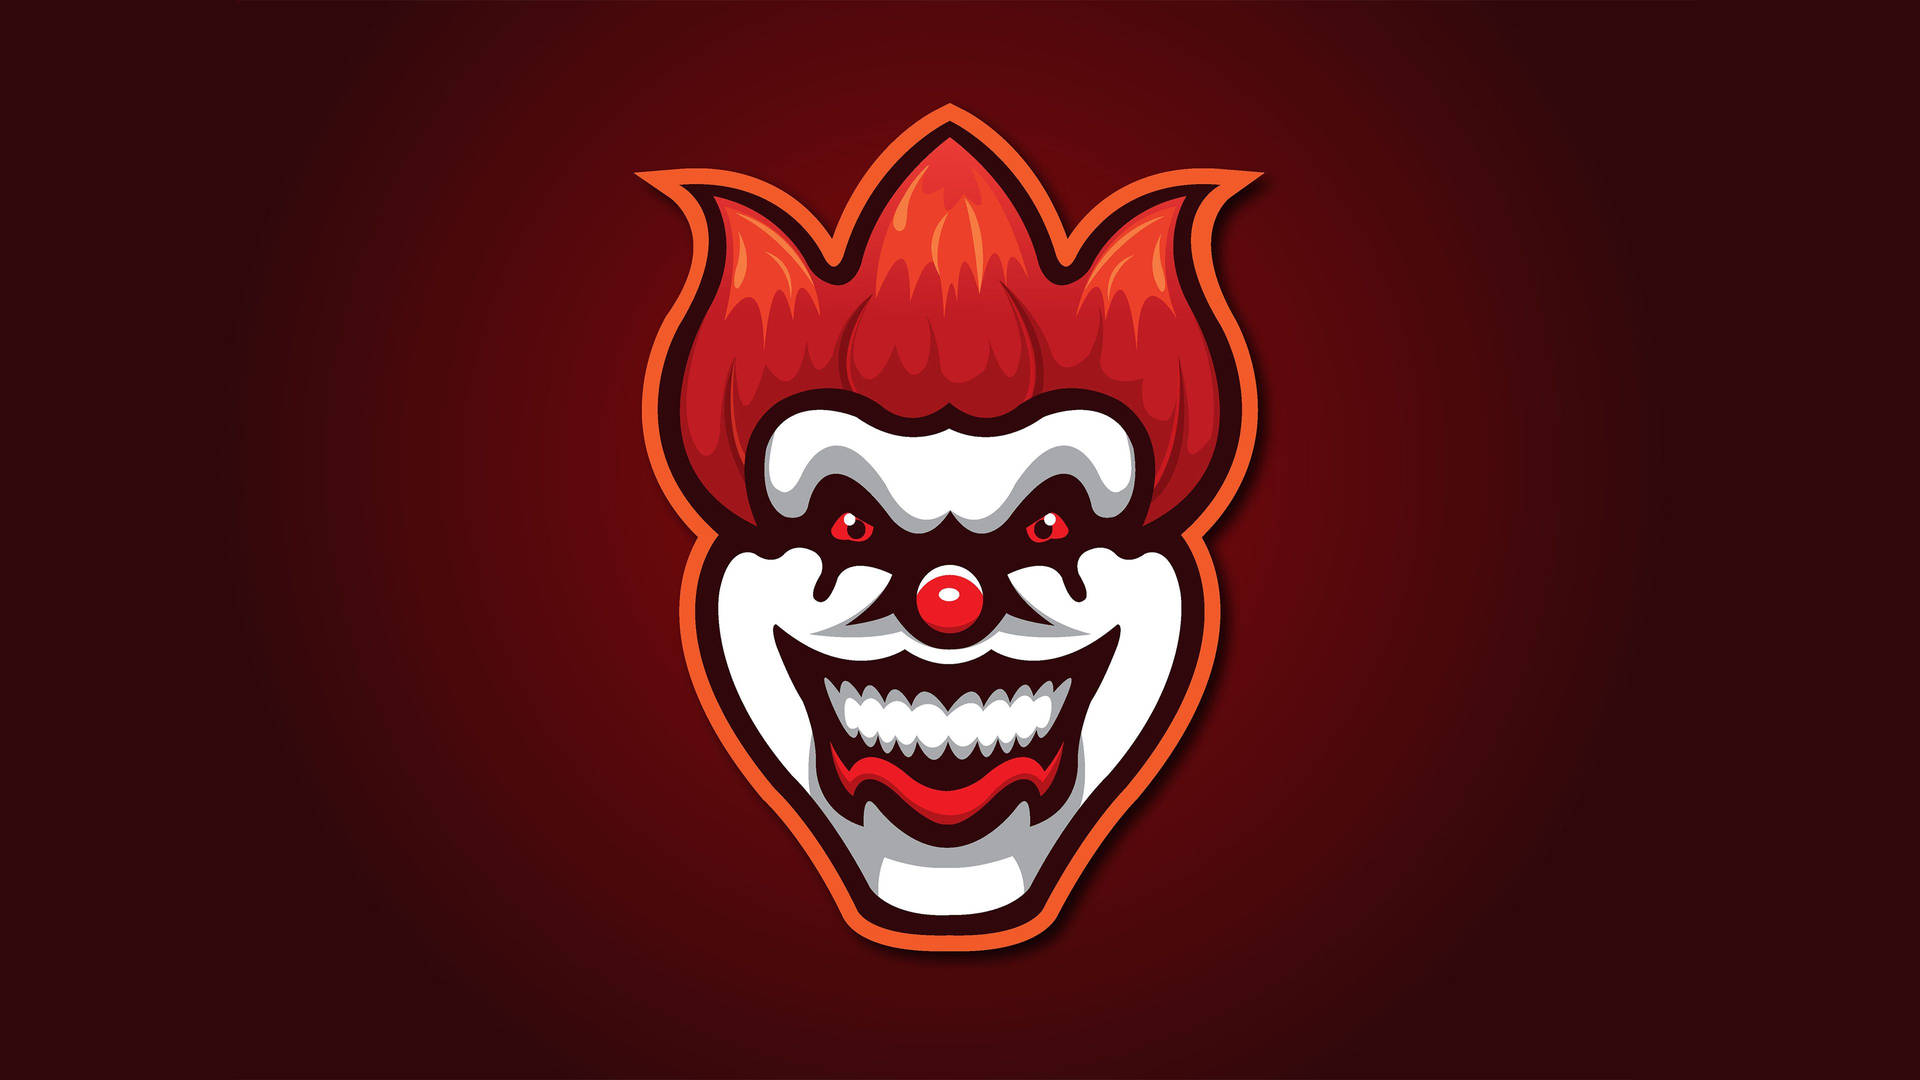 Smiling Clown Logo Background